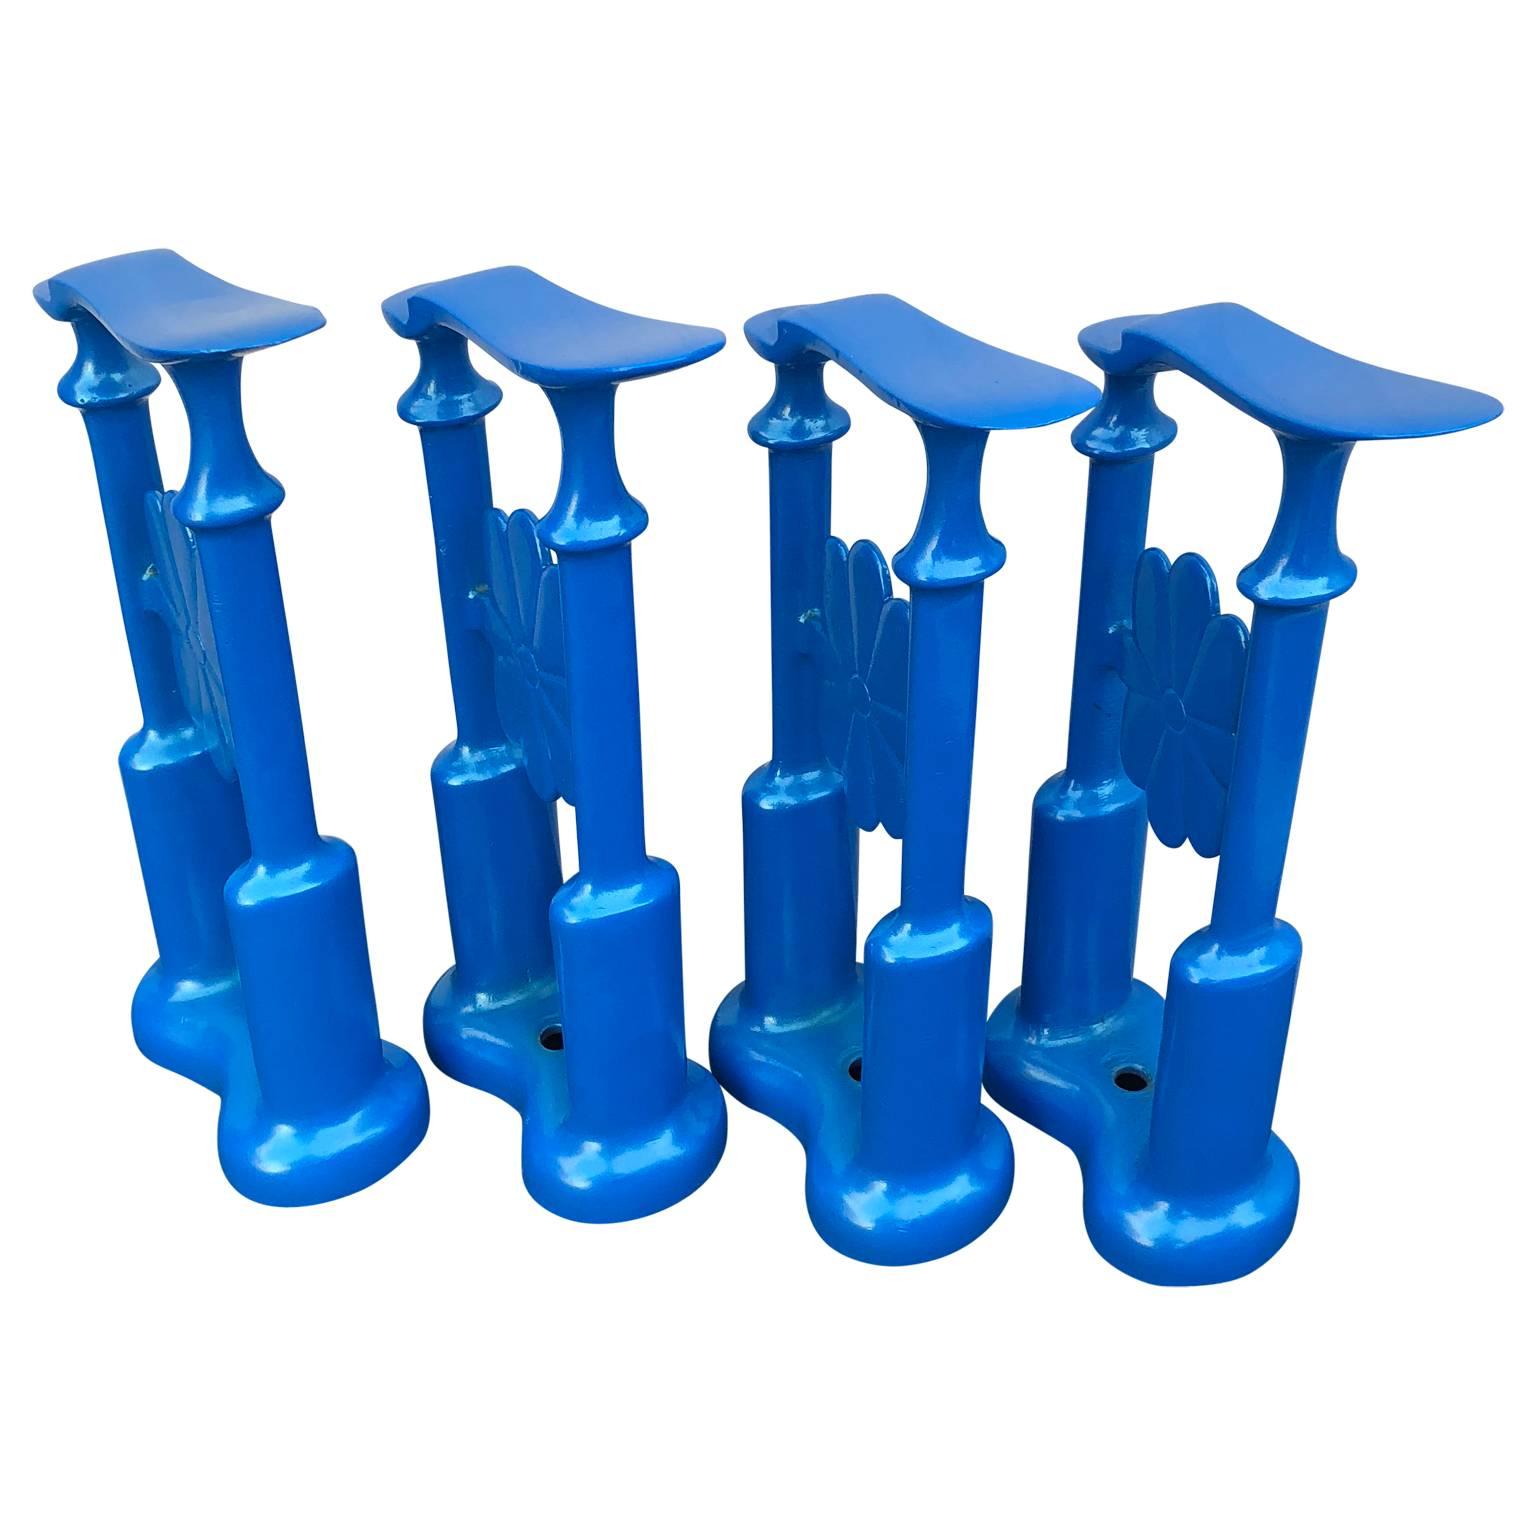 Folk Art Set Of Four Decorative Blue Powder-Coated Cast Iron Shoe-Shine Stands